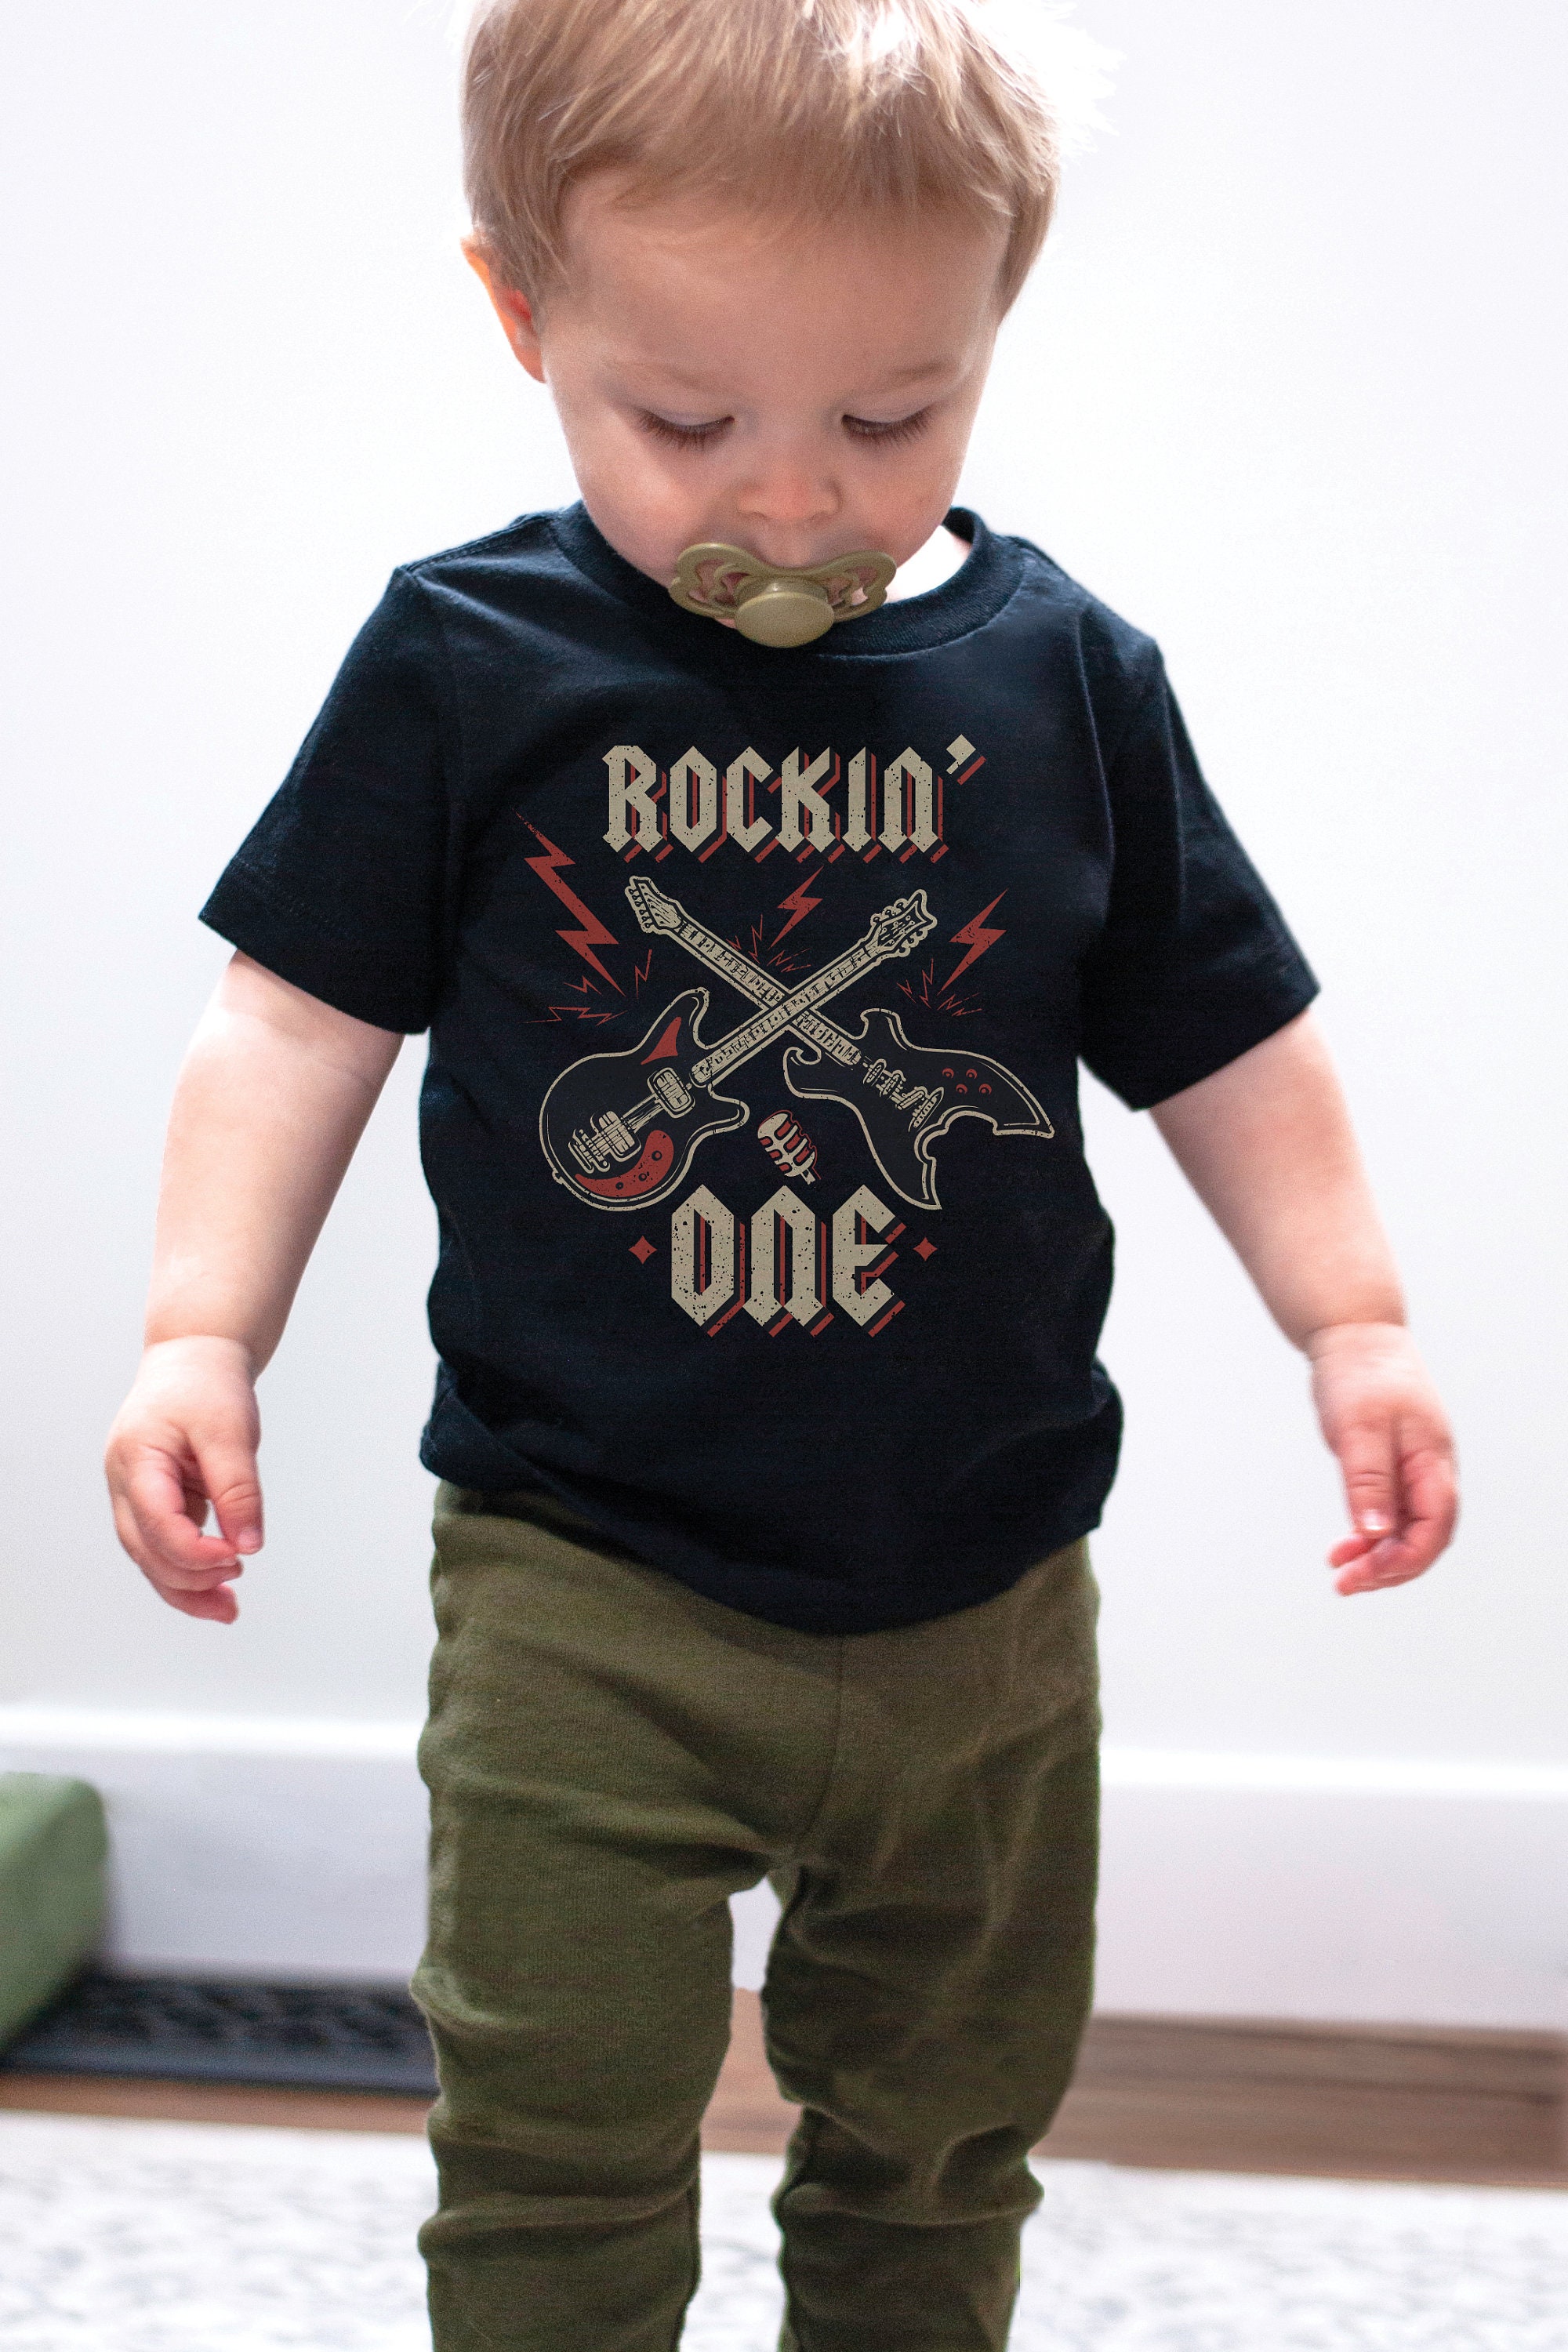 Rockin' One Birthday Shirt, 1st Birthday Shirt, Rock N Roll